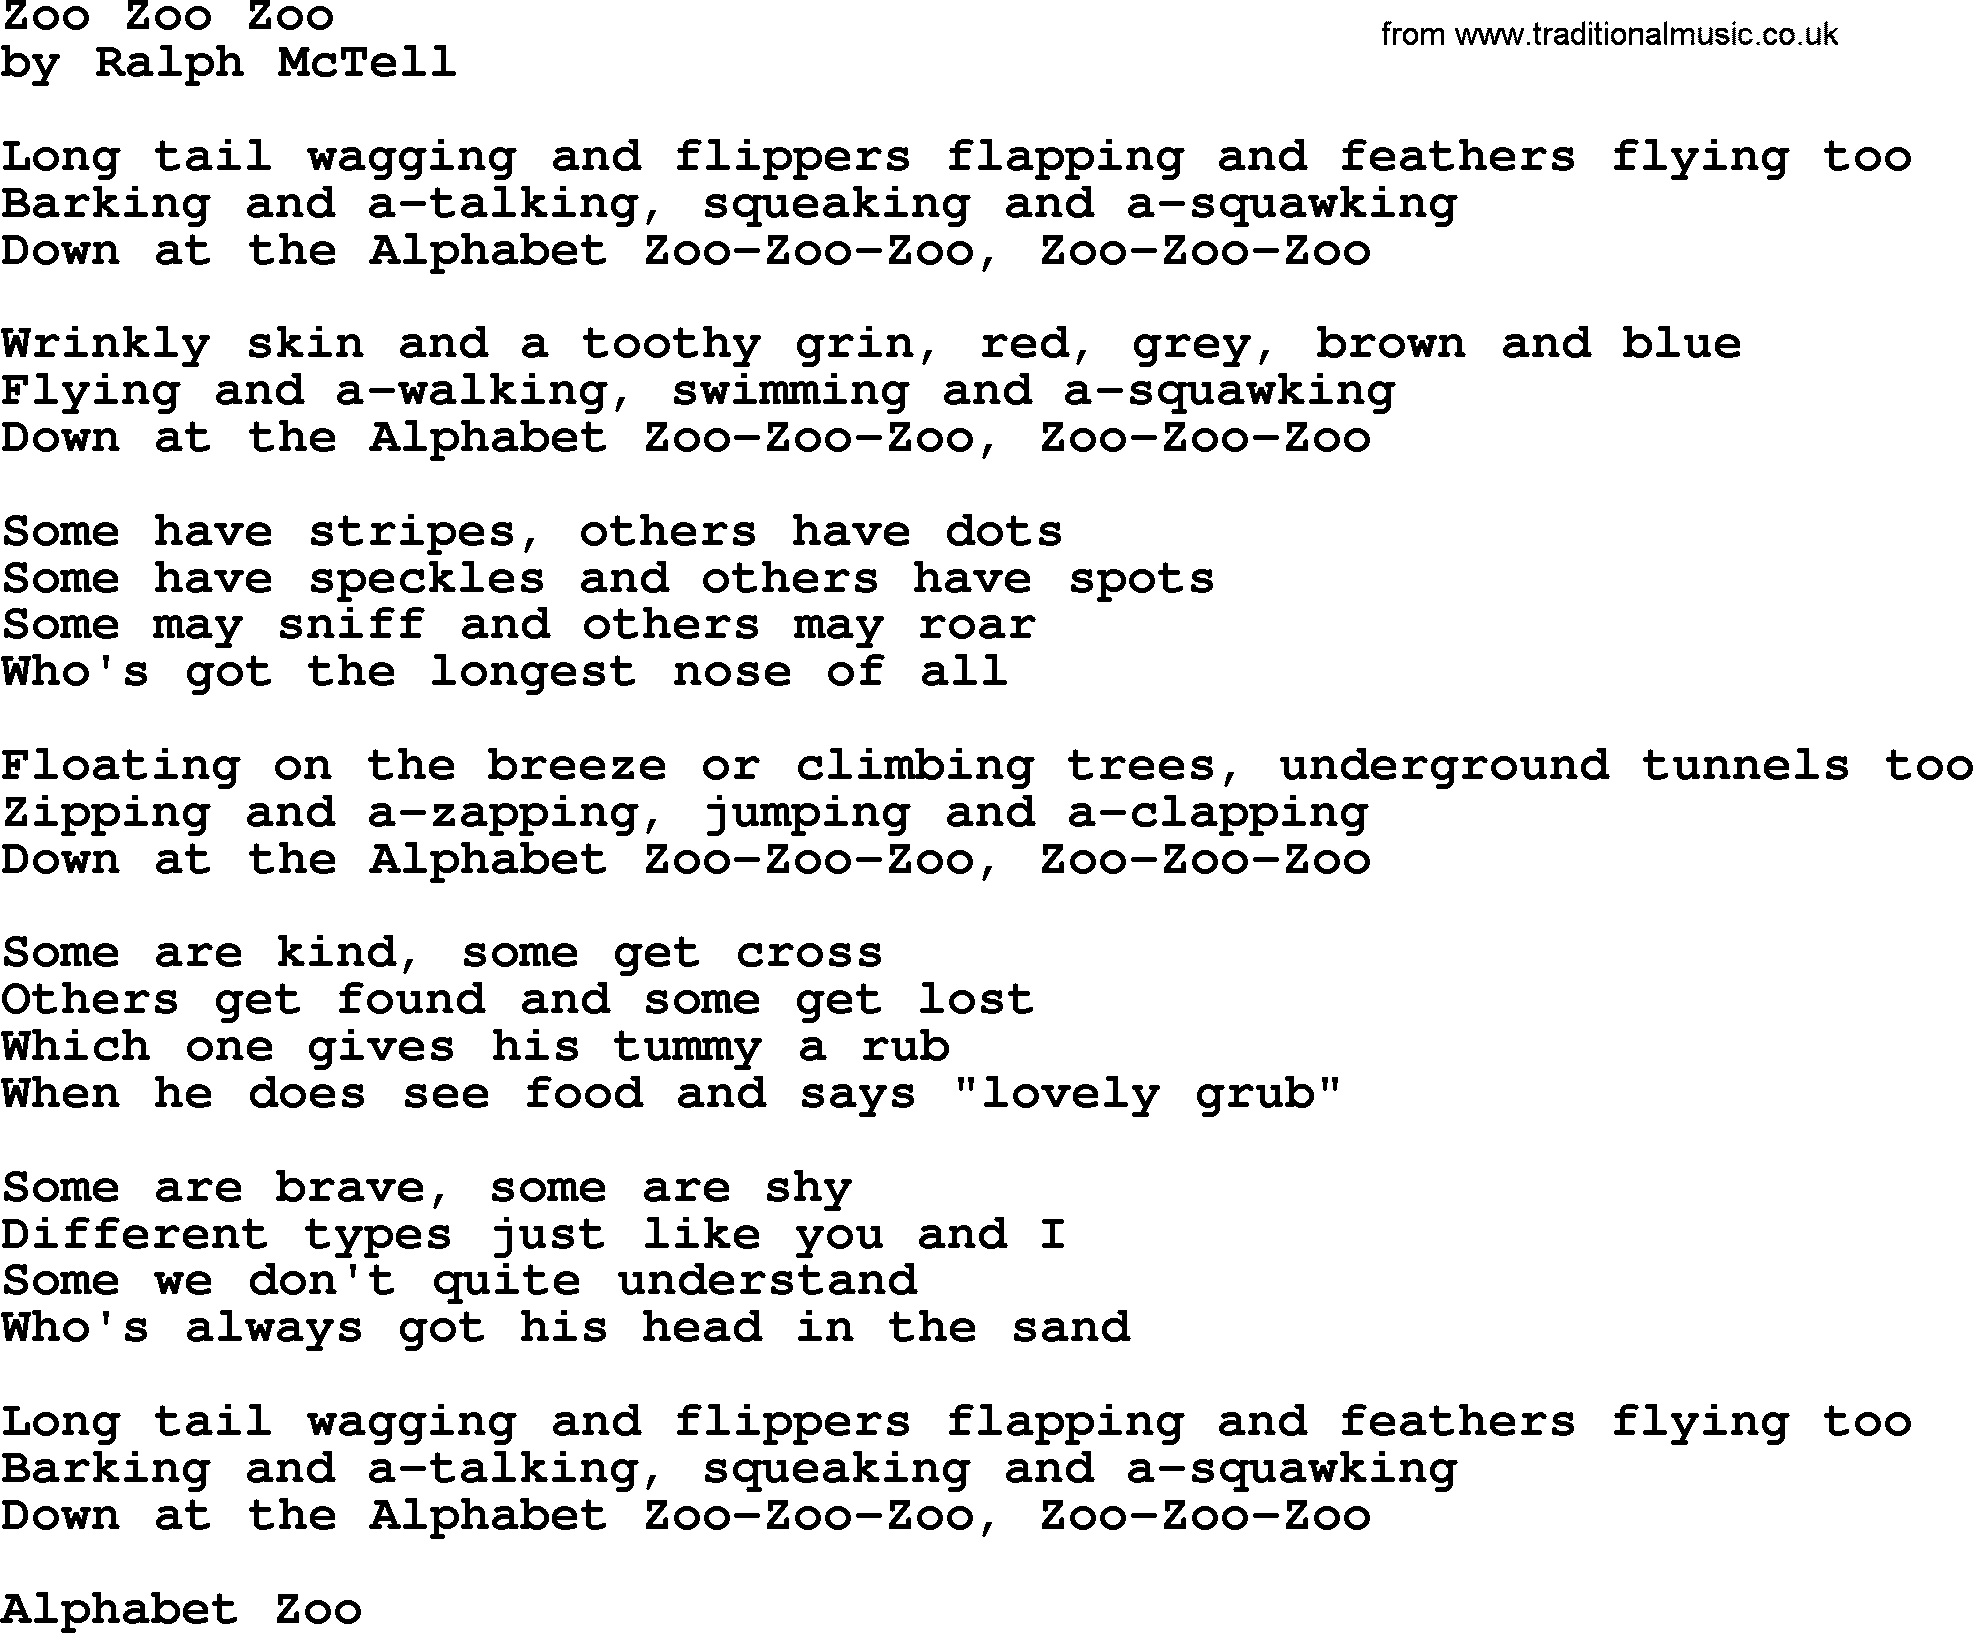 Ralph McTell Song: Zoo Zoo Zoo, lyrics